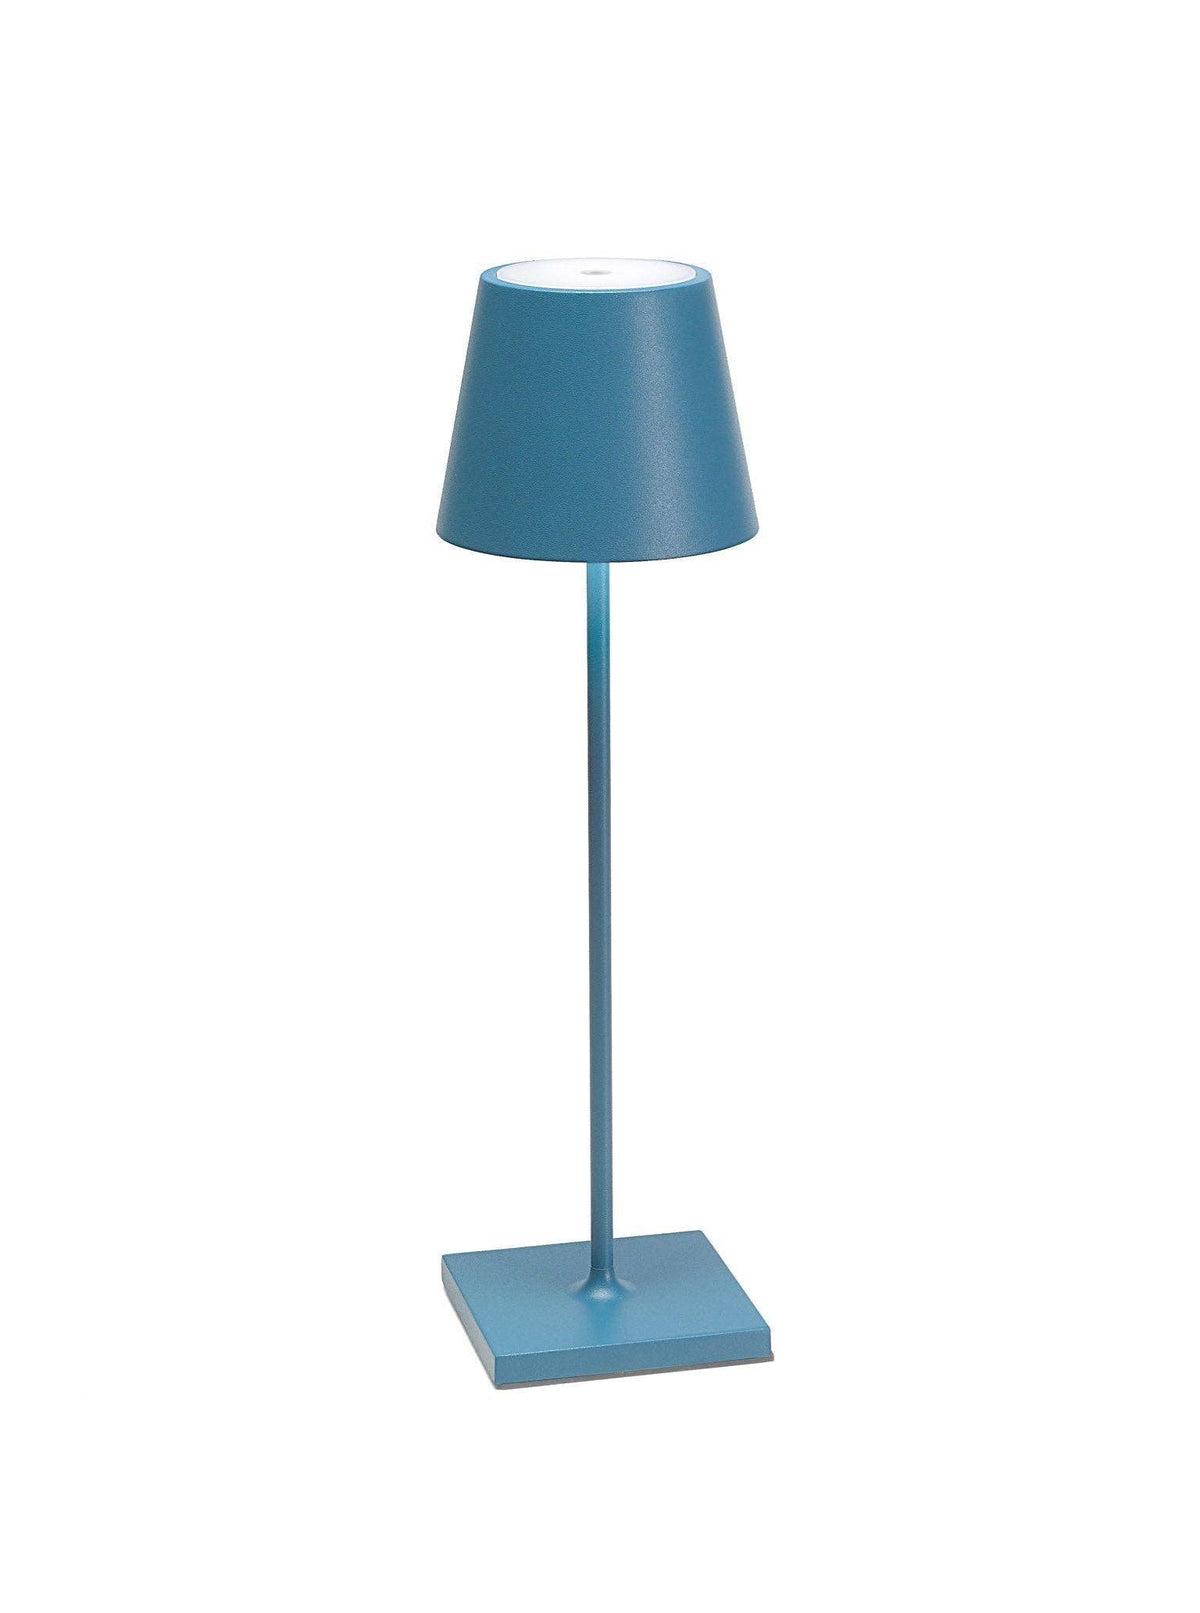 Poldina Pro Cordless Lamp in Blue - The Preppy Bunny